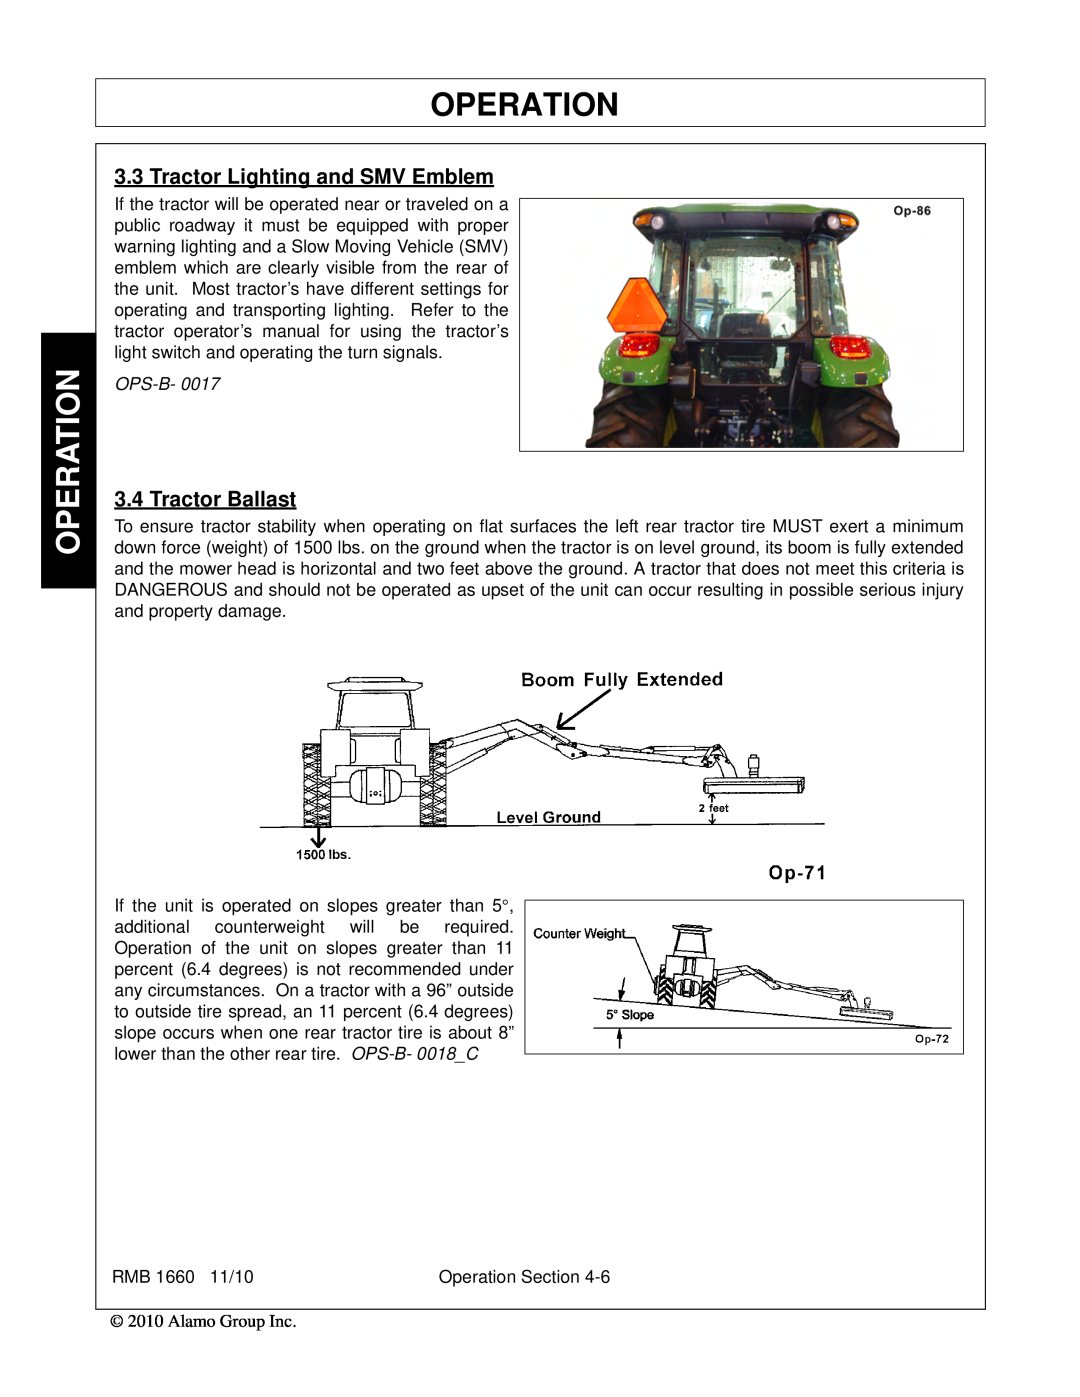 Bush Hog RMB 1660 manual Operation, Tractor Lighting and SMV Emblem, Tractor Ballast, Ops-B 